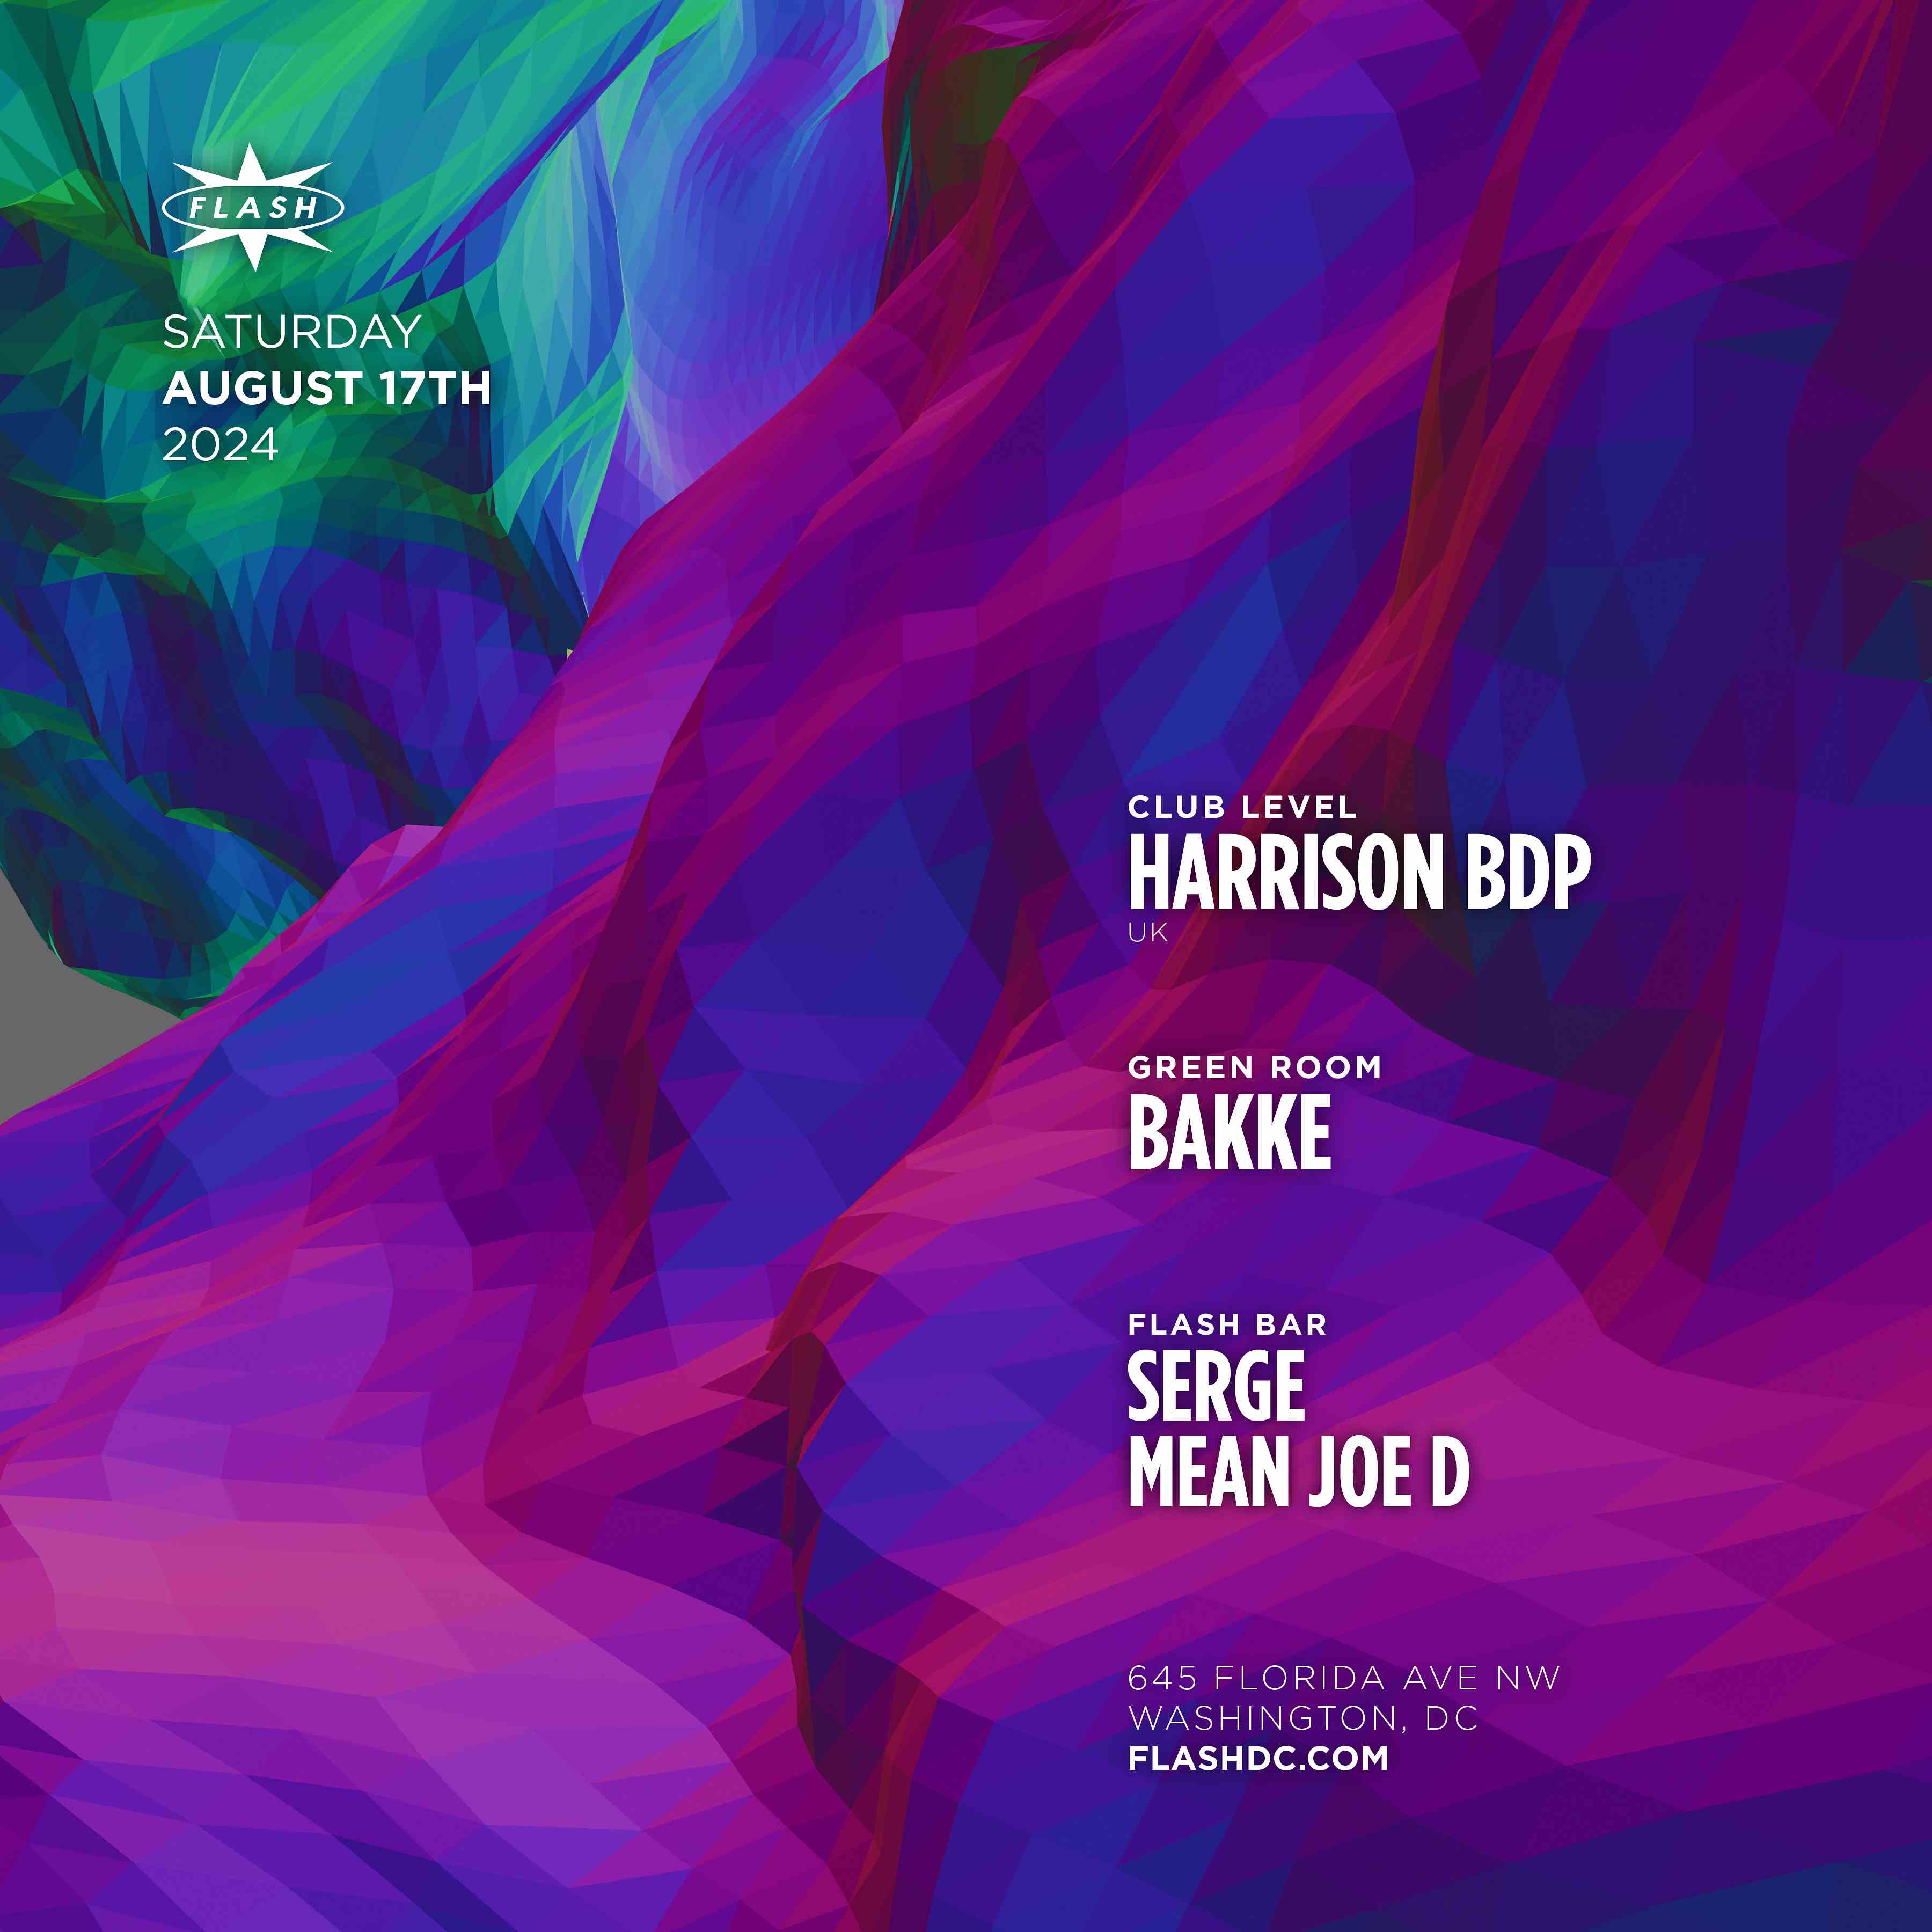 Harrison BDP - Bakke event flyer